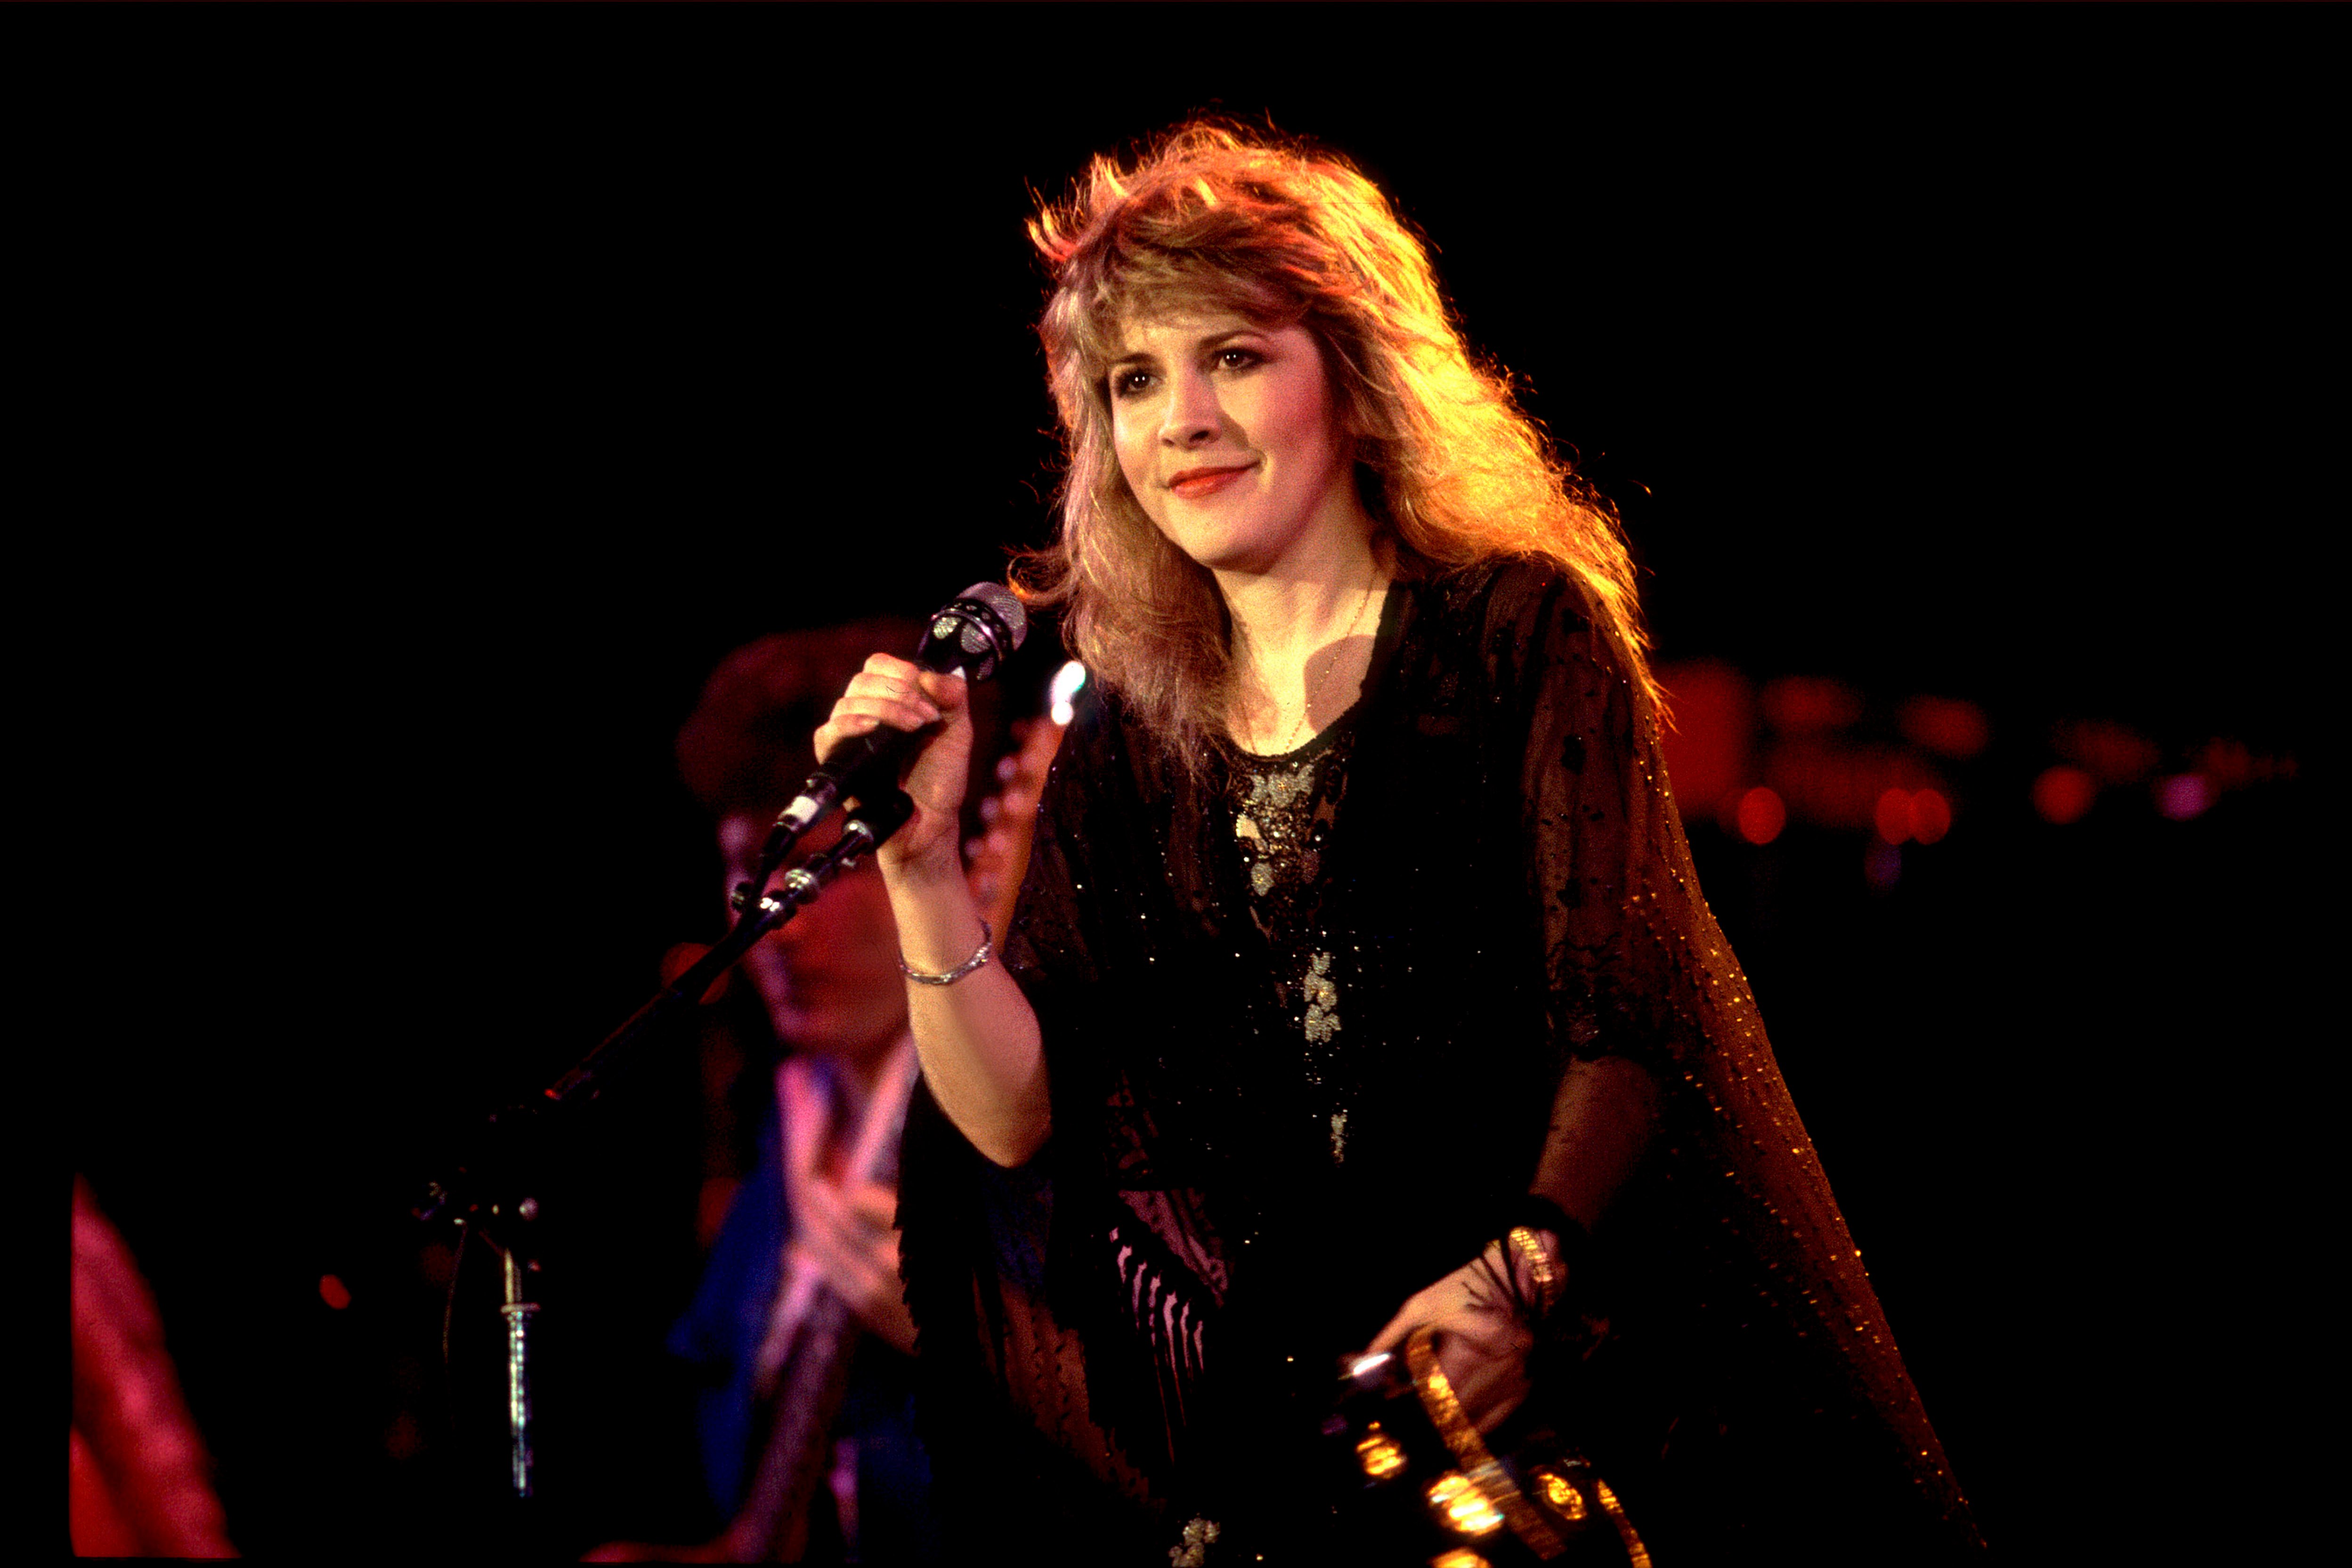 Fleetwood Mac's Stevie Nicks holding a microphone